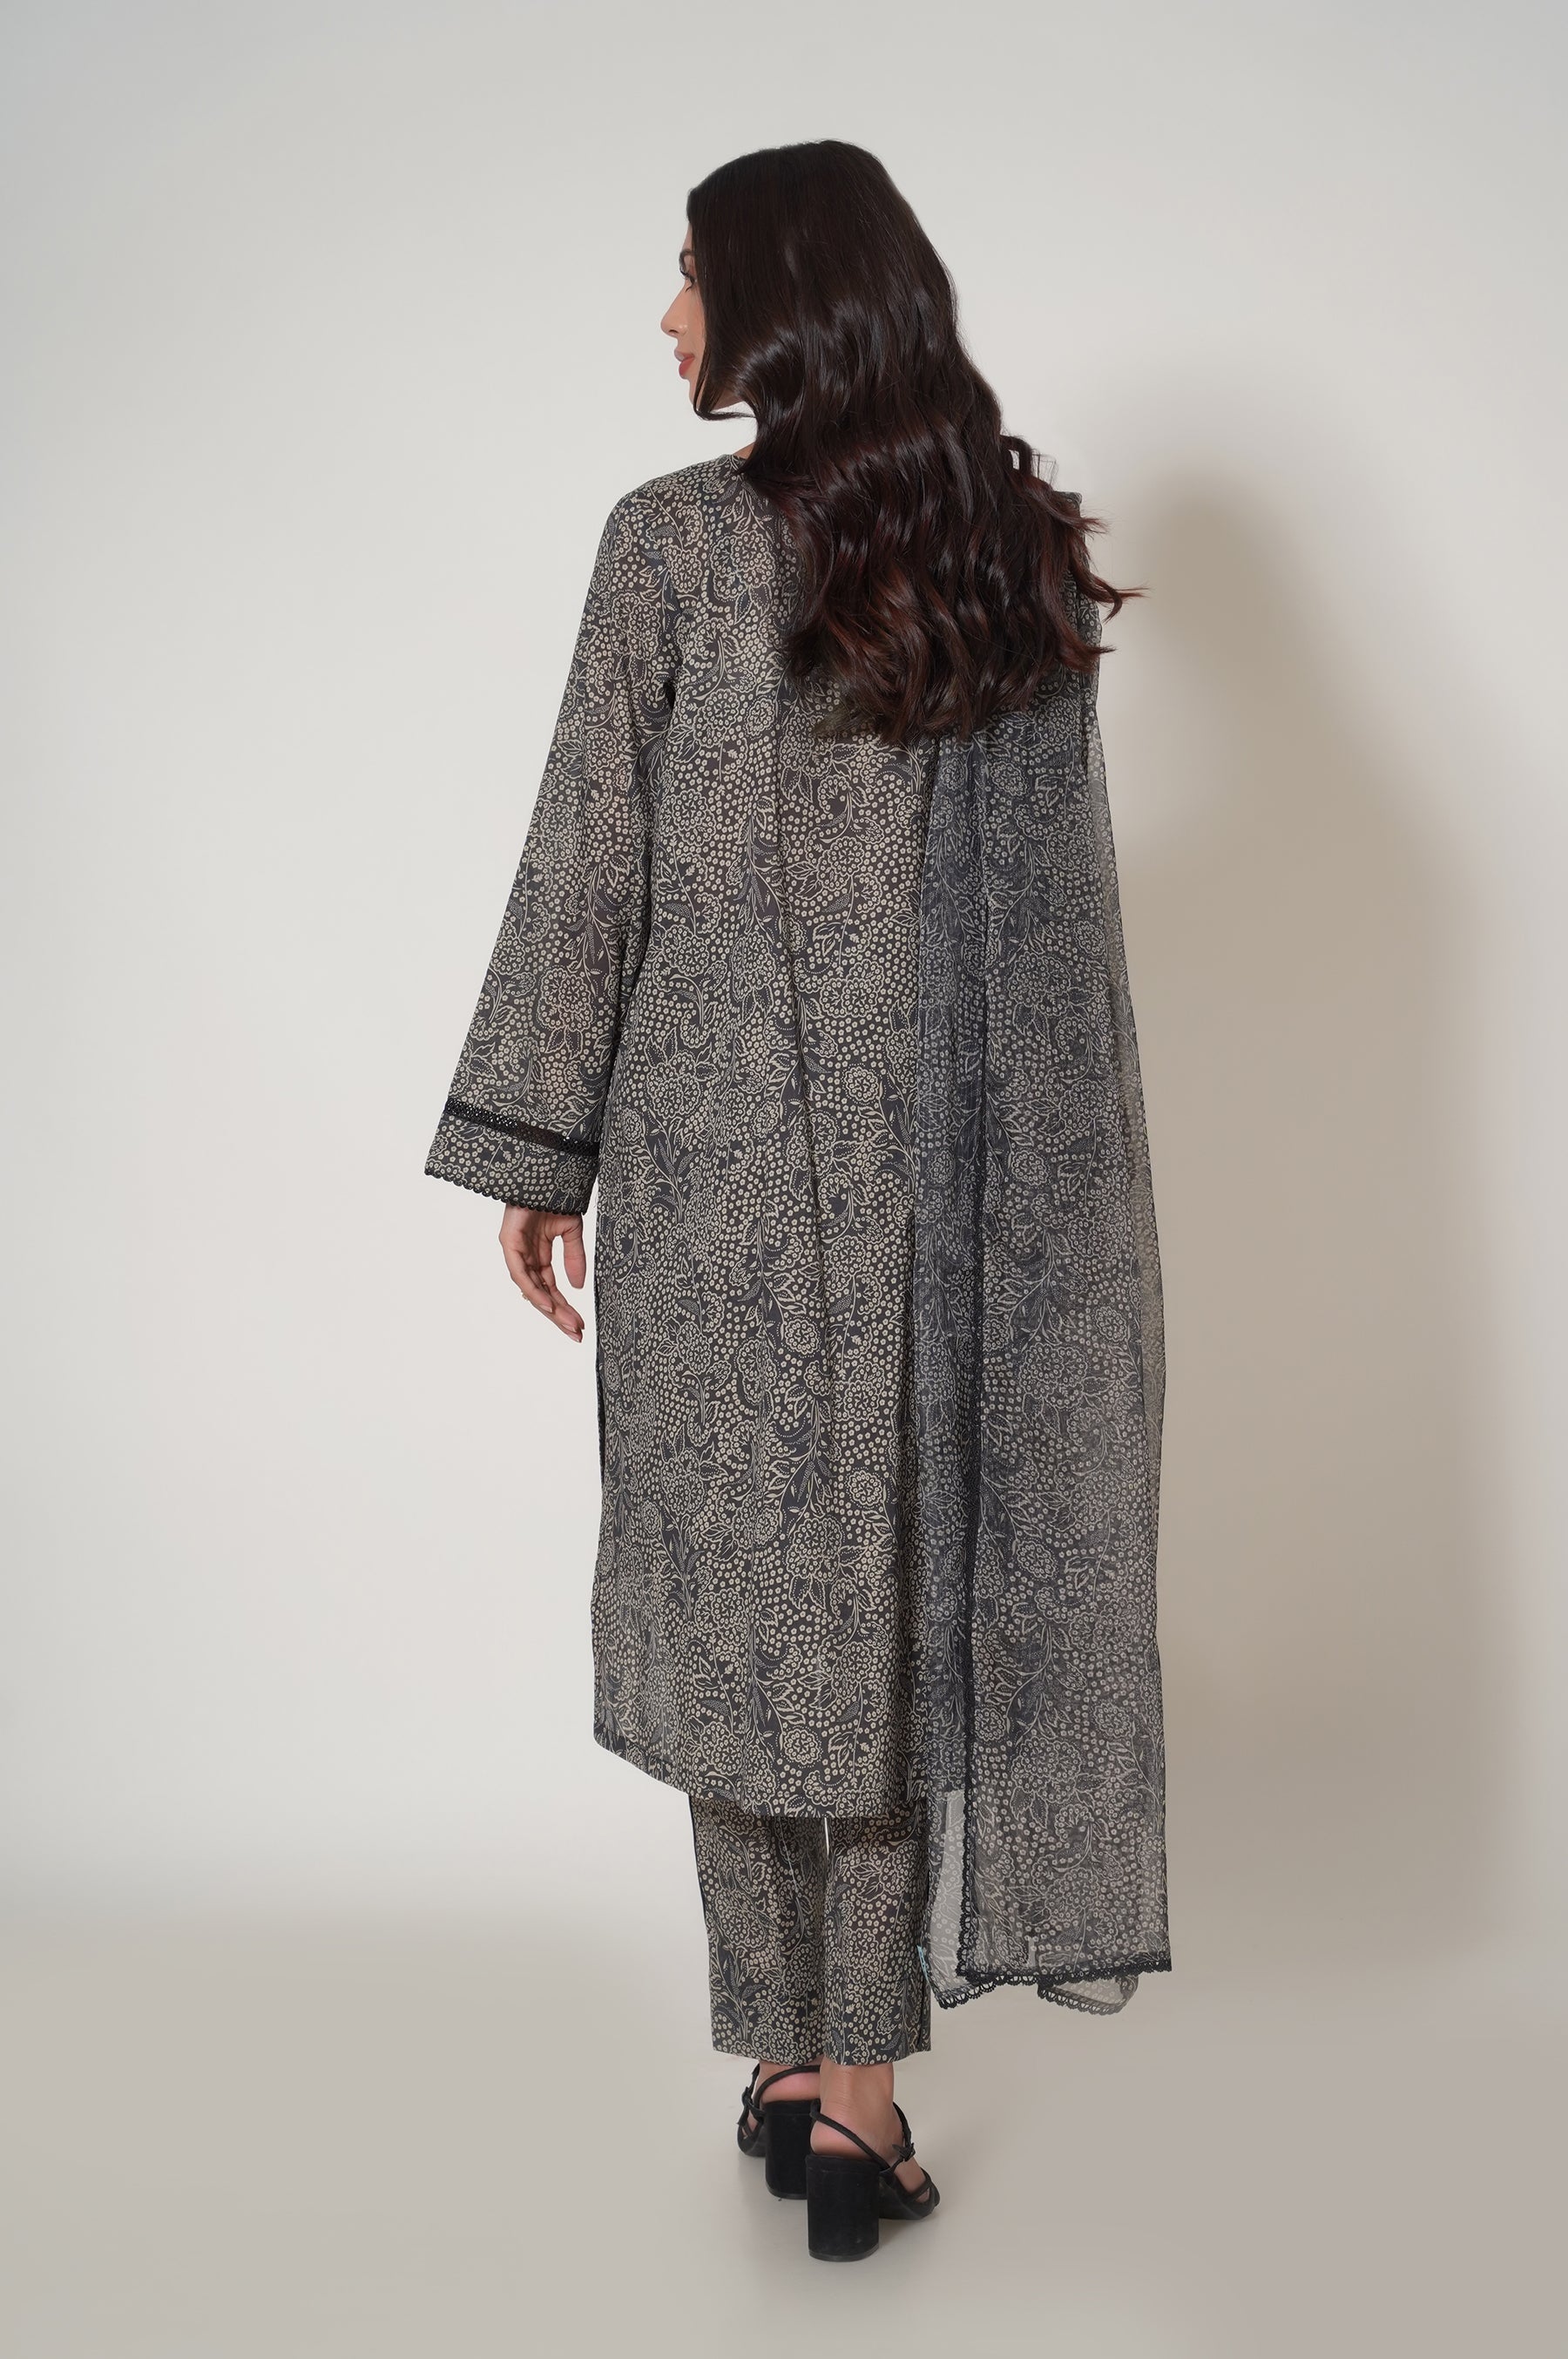 Zeen | Summer Collection 24 | 33623 - Khanumjan  Pakistani Clothes and Designer Dresses in UK, USA 